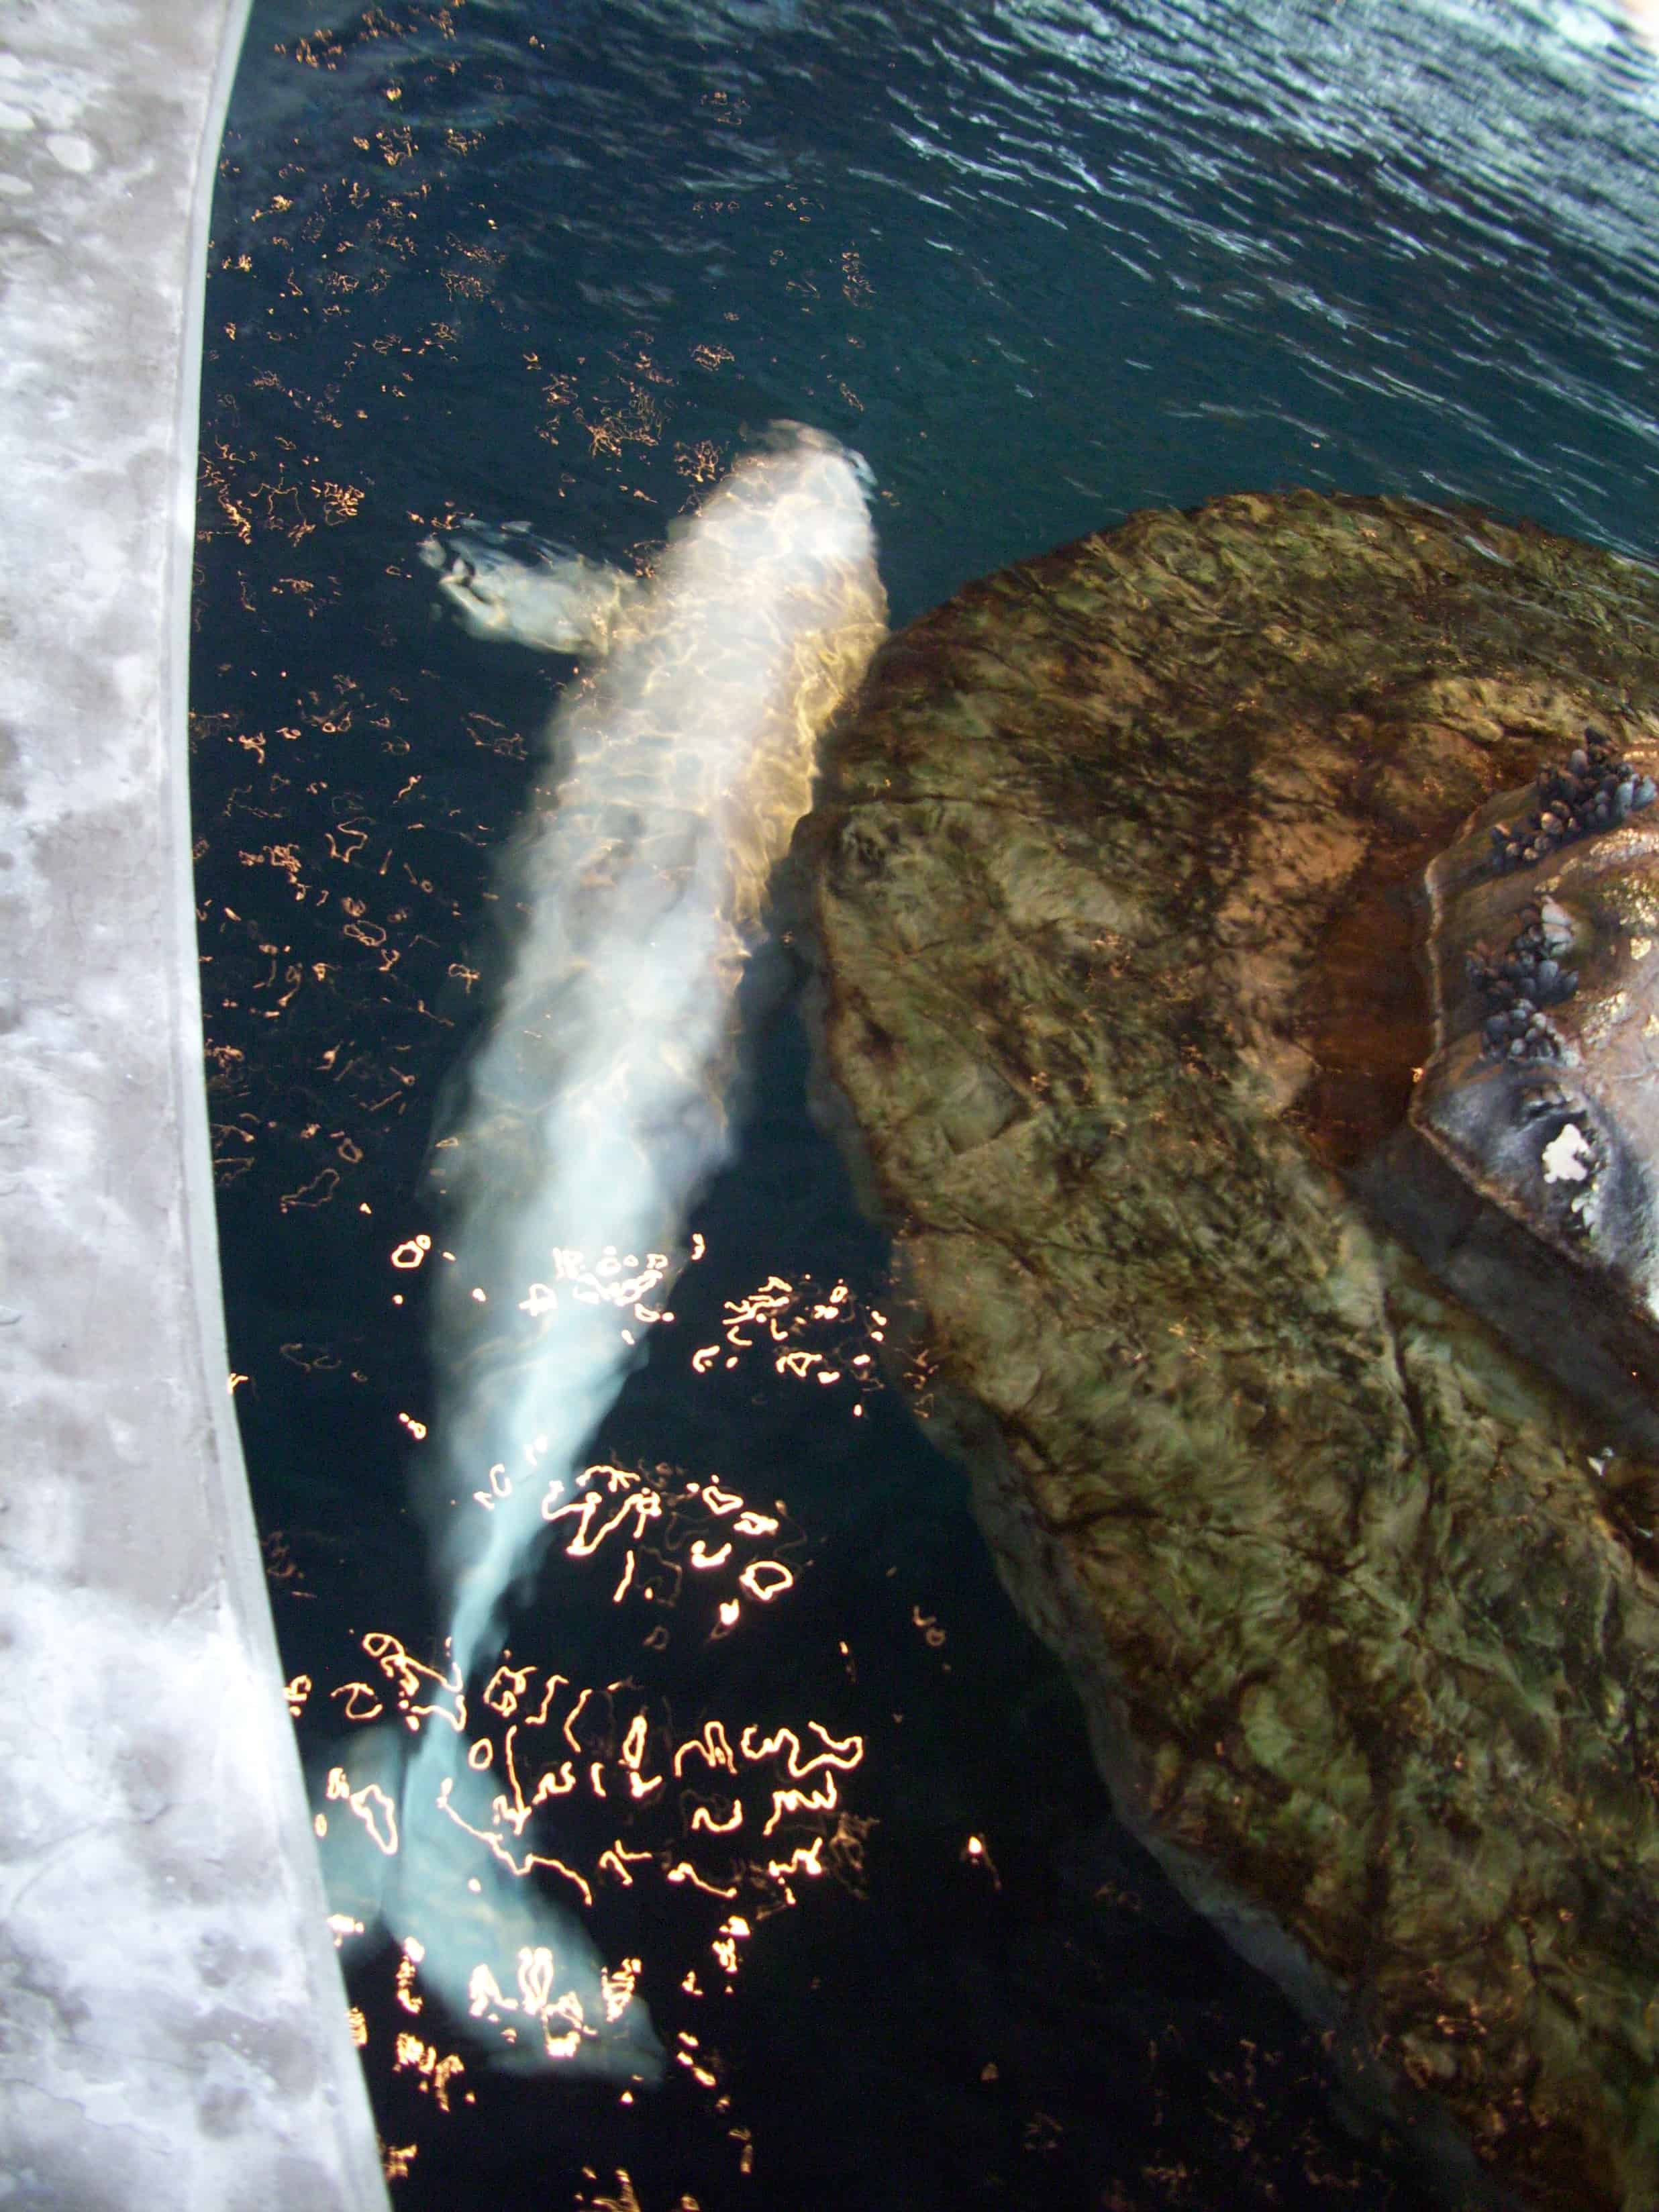 Beluga whale at the Shedd Aquarium